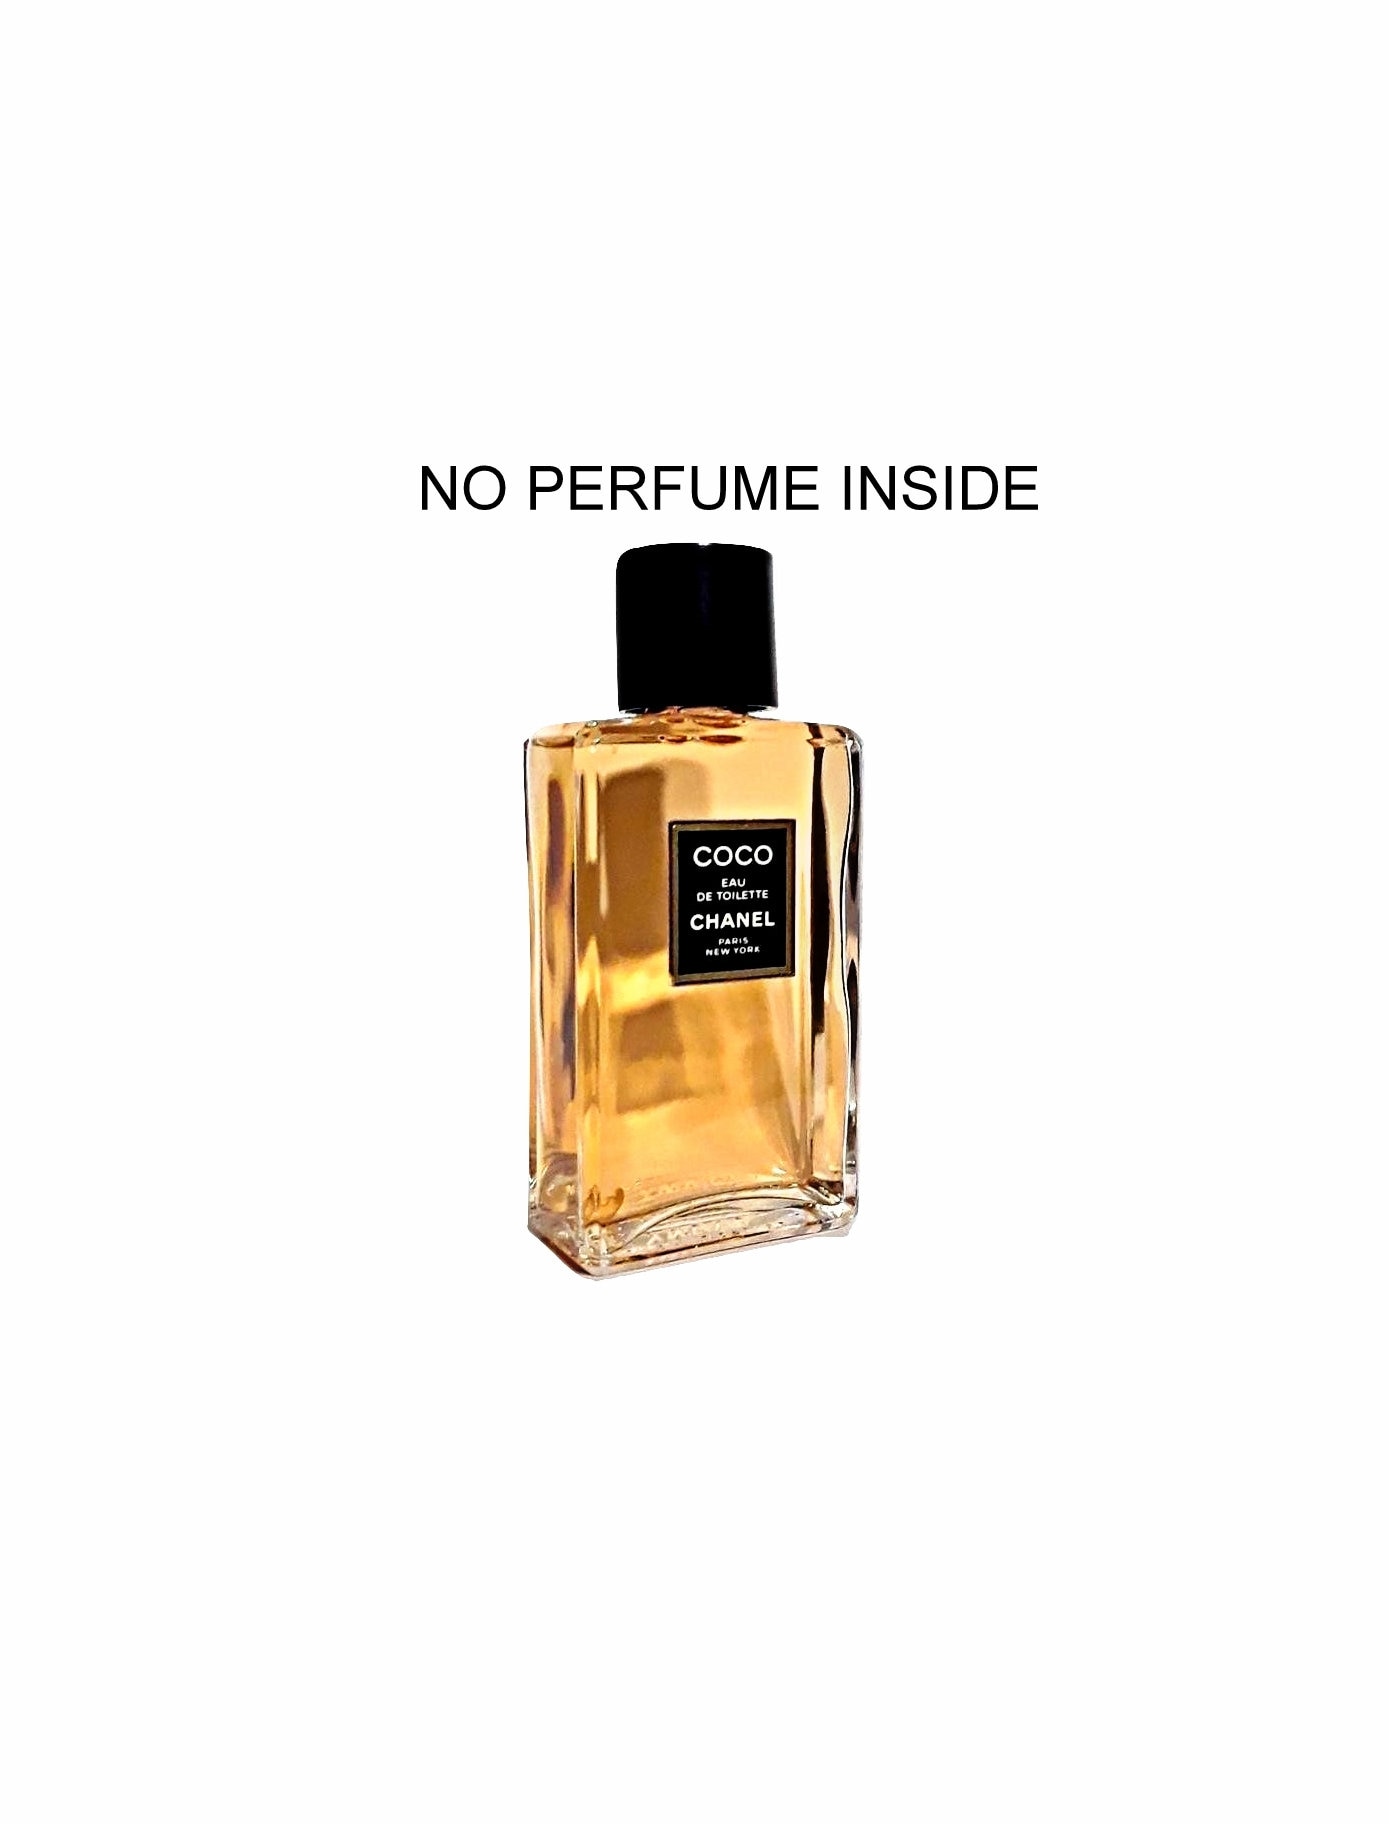 Chanel COCO Eau De Parfum Splash Perfume 1.7oz/50ml Vintage